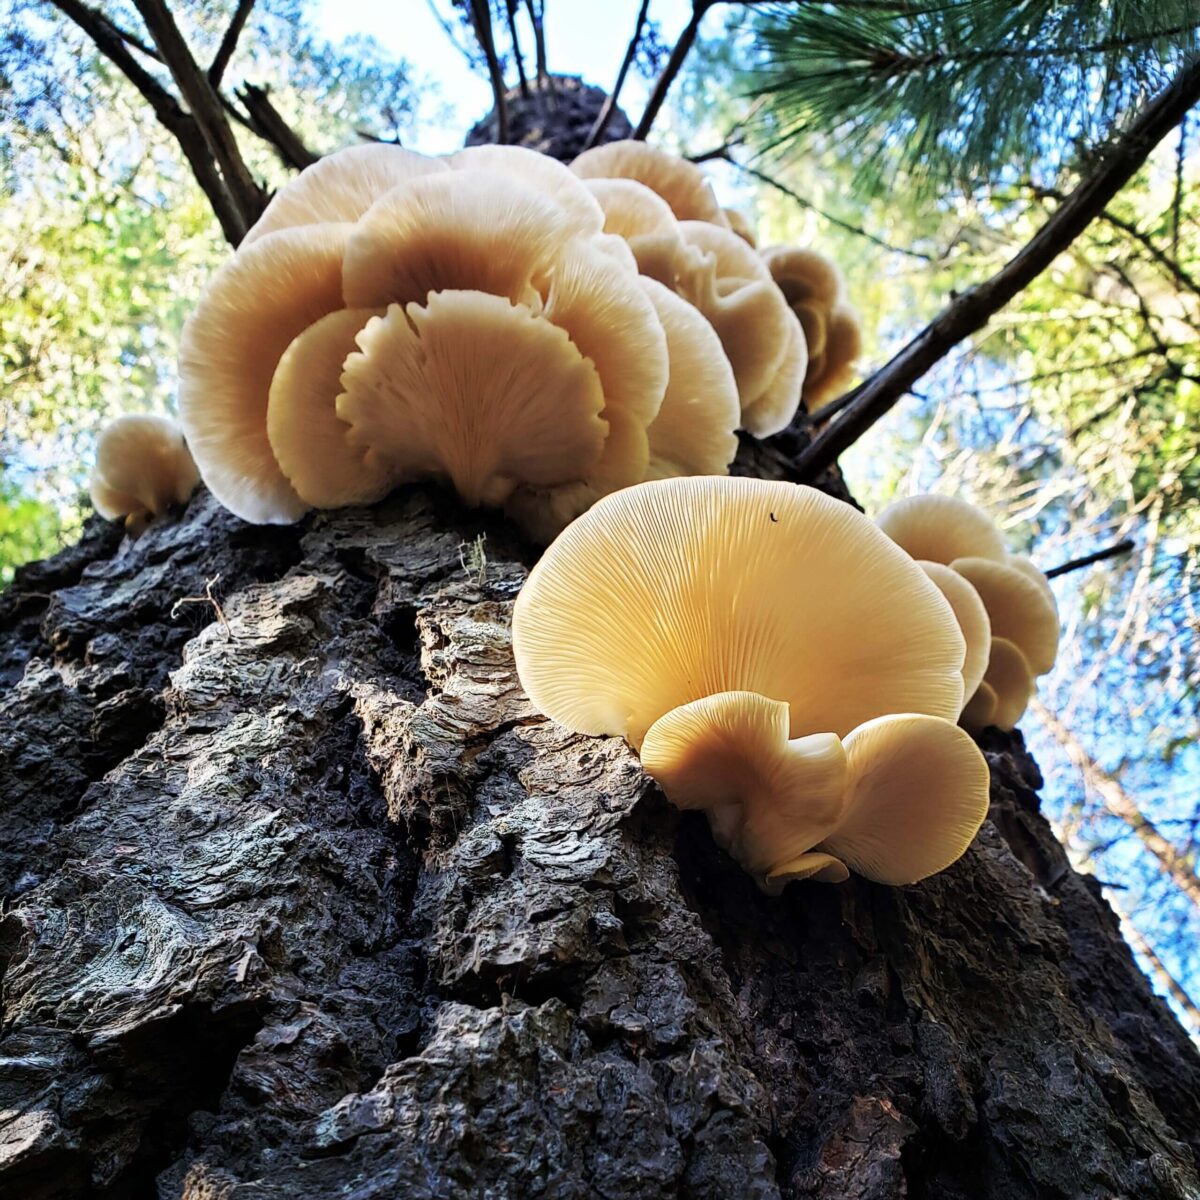 Photograph of mushrooms